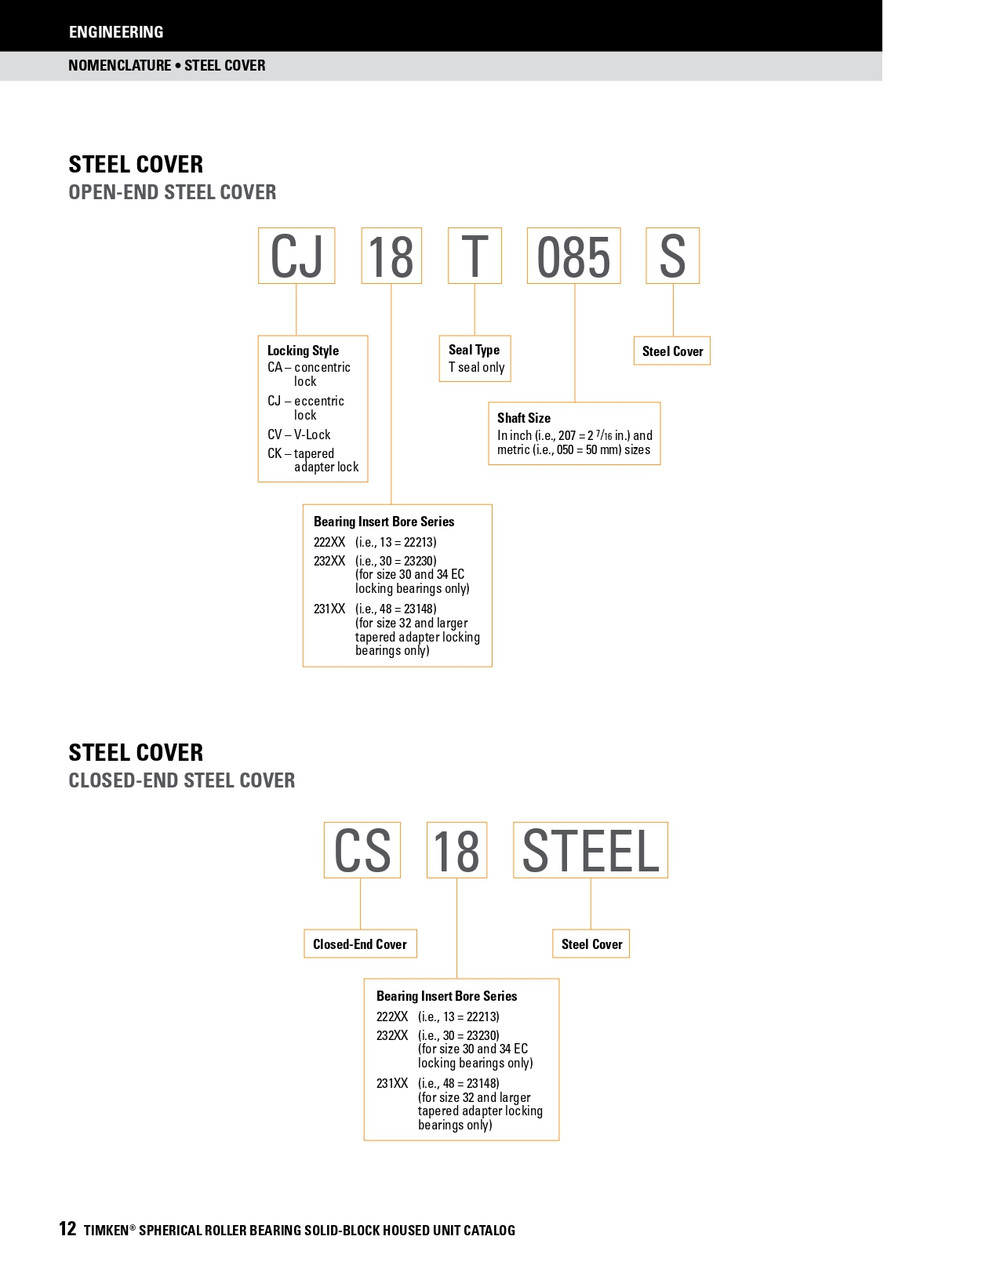 65mm Timken SRB Steel Open End Cover w/Teflon Seal - QV V-Lock® Type   CV14T065S